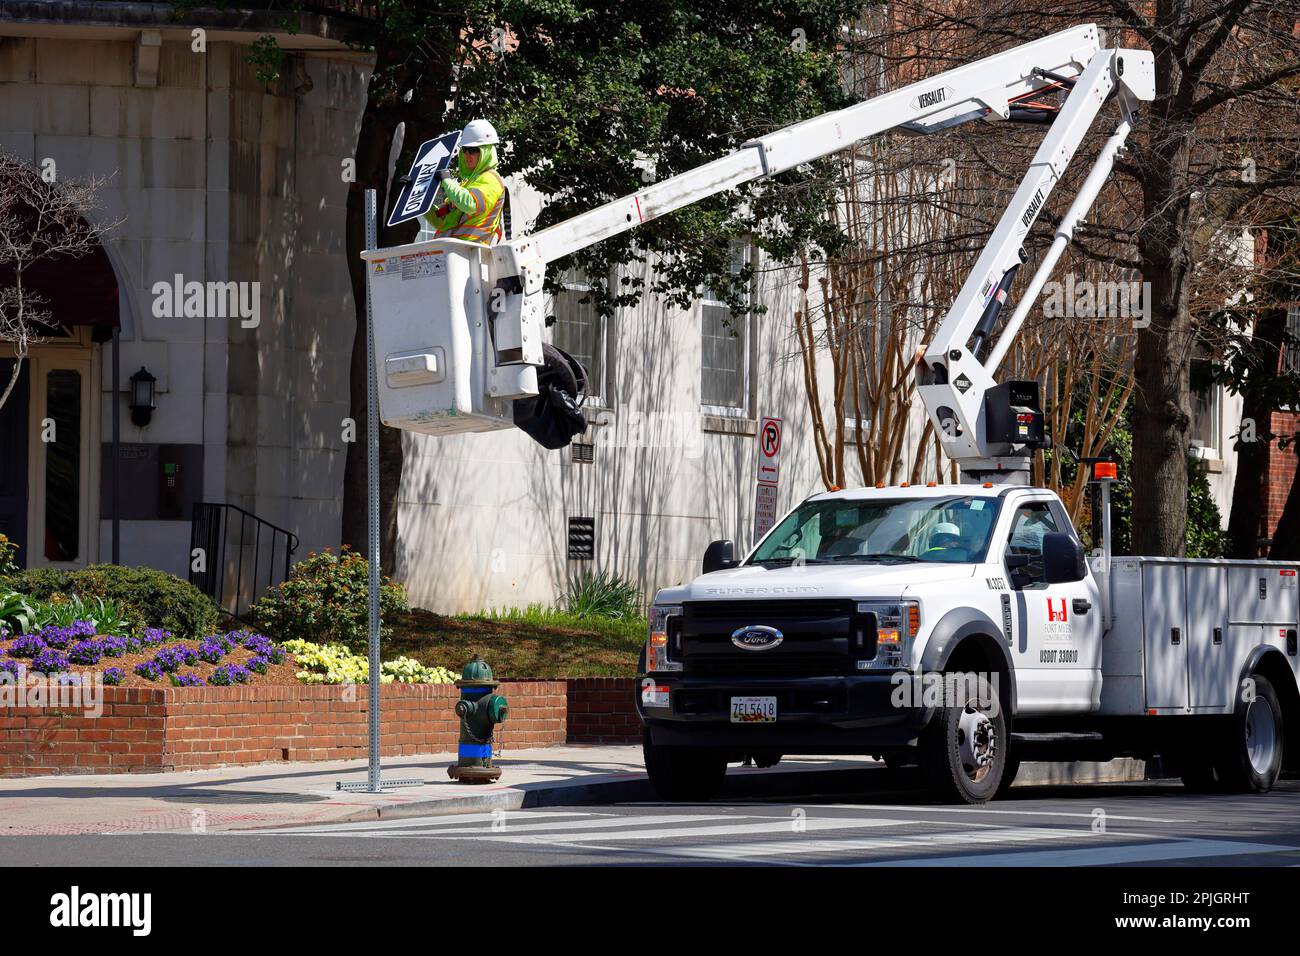 A worker in a Versalift bucket truck, aerial work platform, installs a one way street sign in Washington DC. Stock Photo